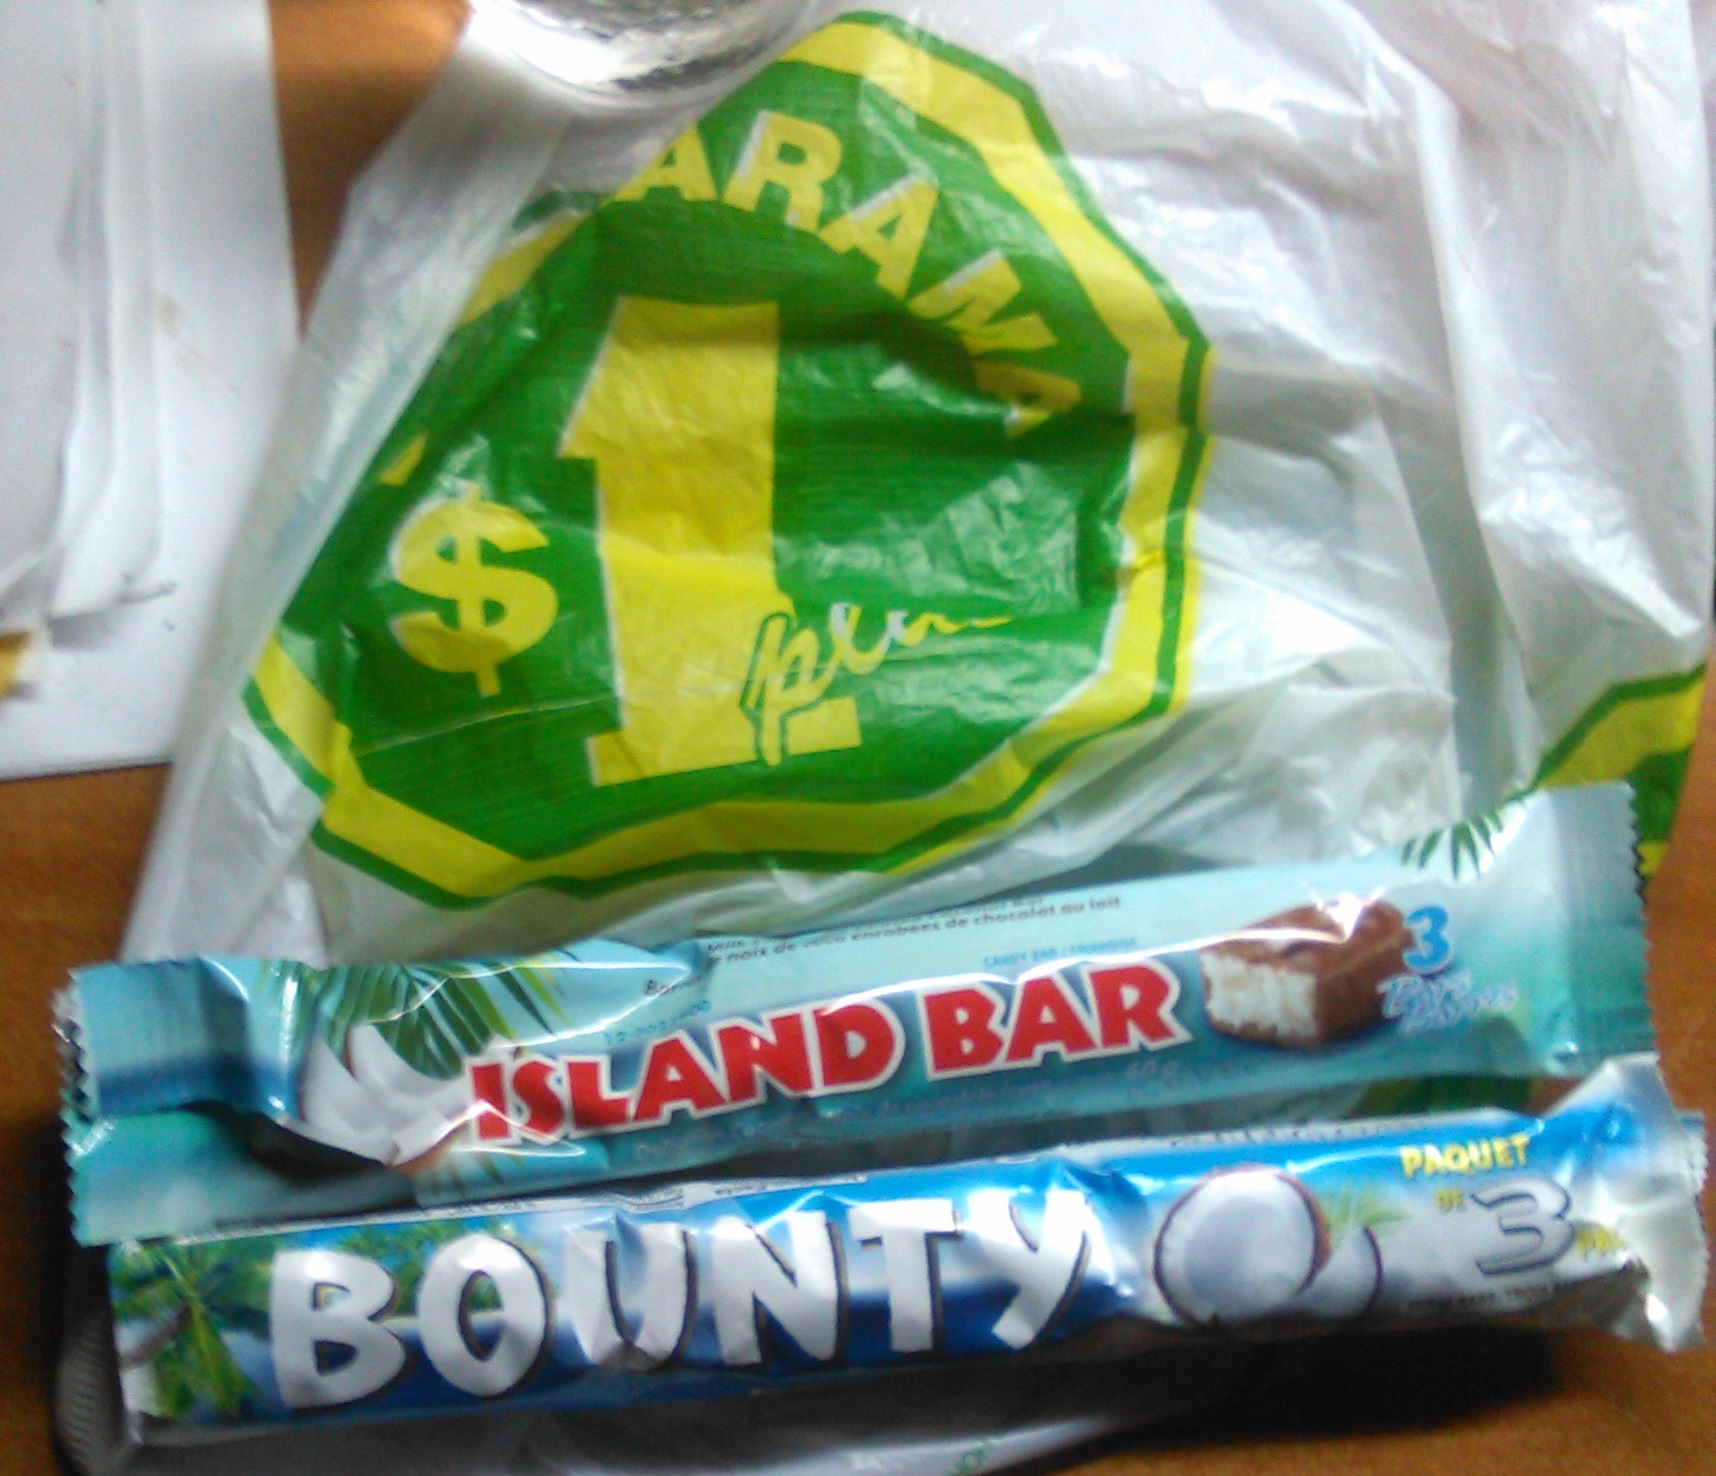 Bounty-Island-bar-Chocolate-(myway2fortune.info).jpg